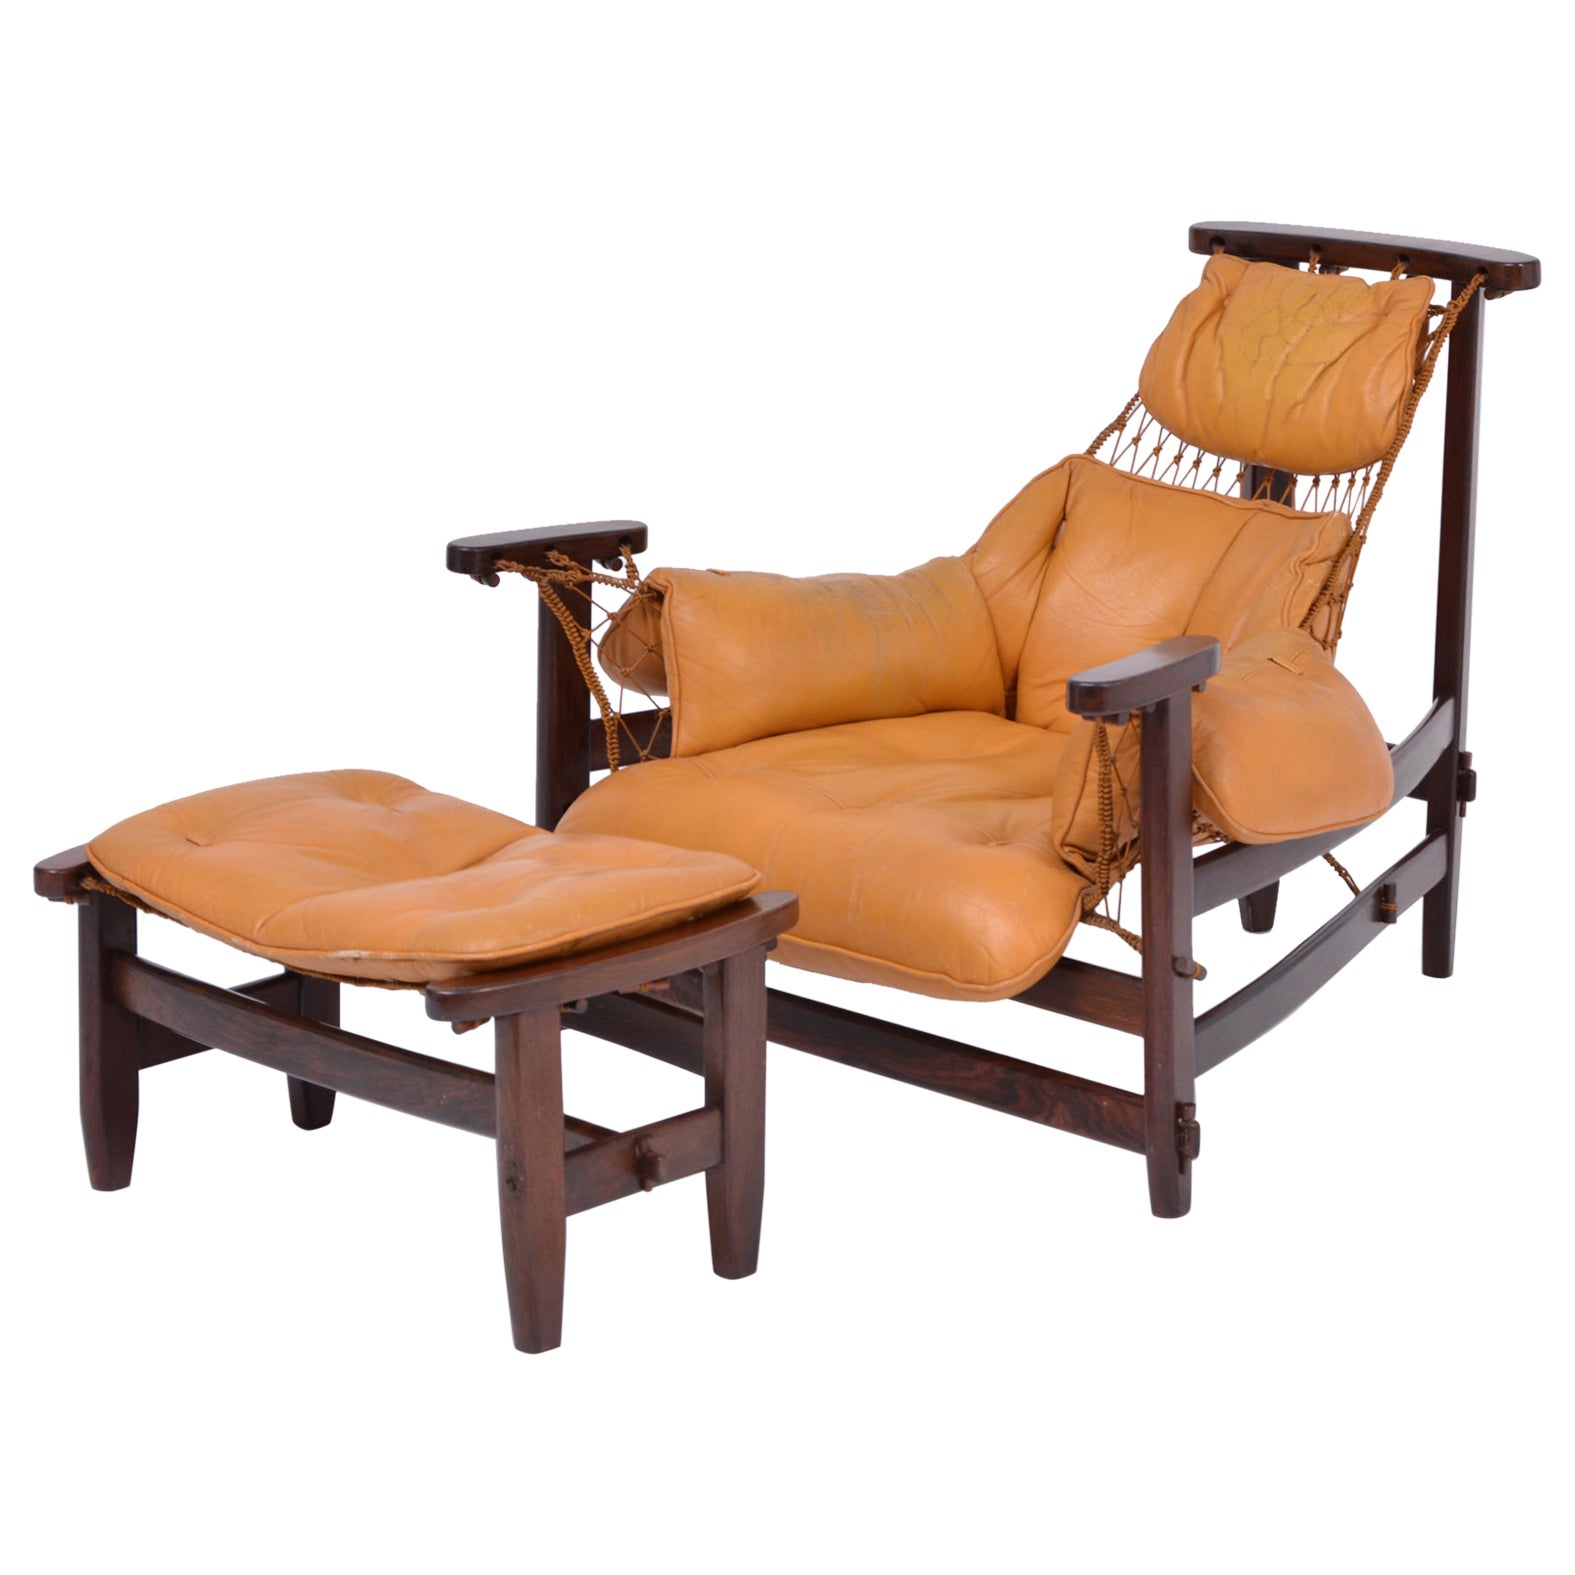 Iconic Brazilian Jangada Lounge Chair with Ottoman by Jean Gillon, 1968